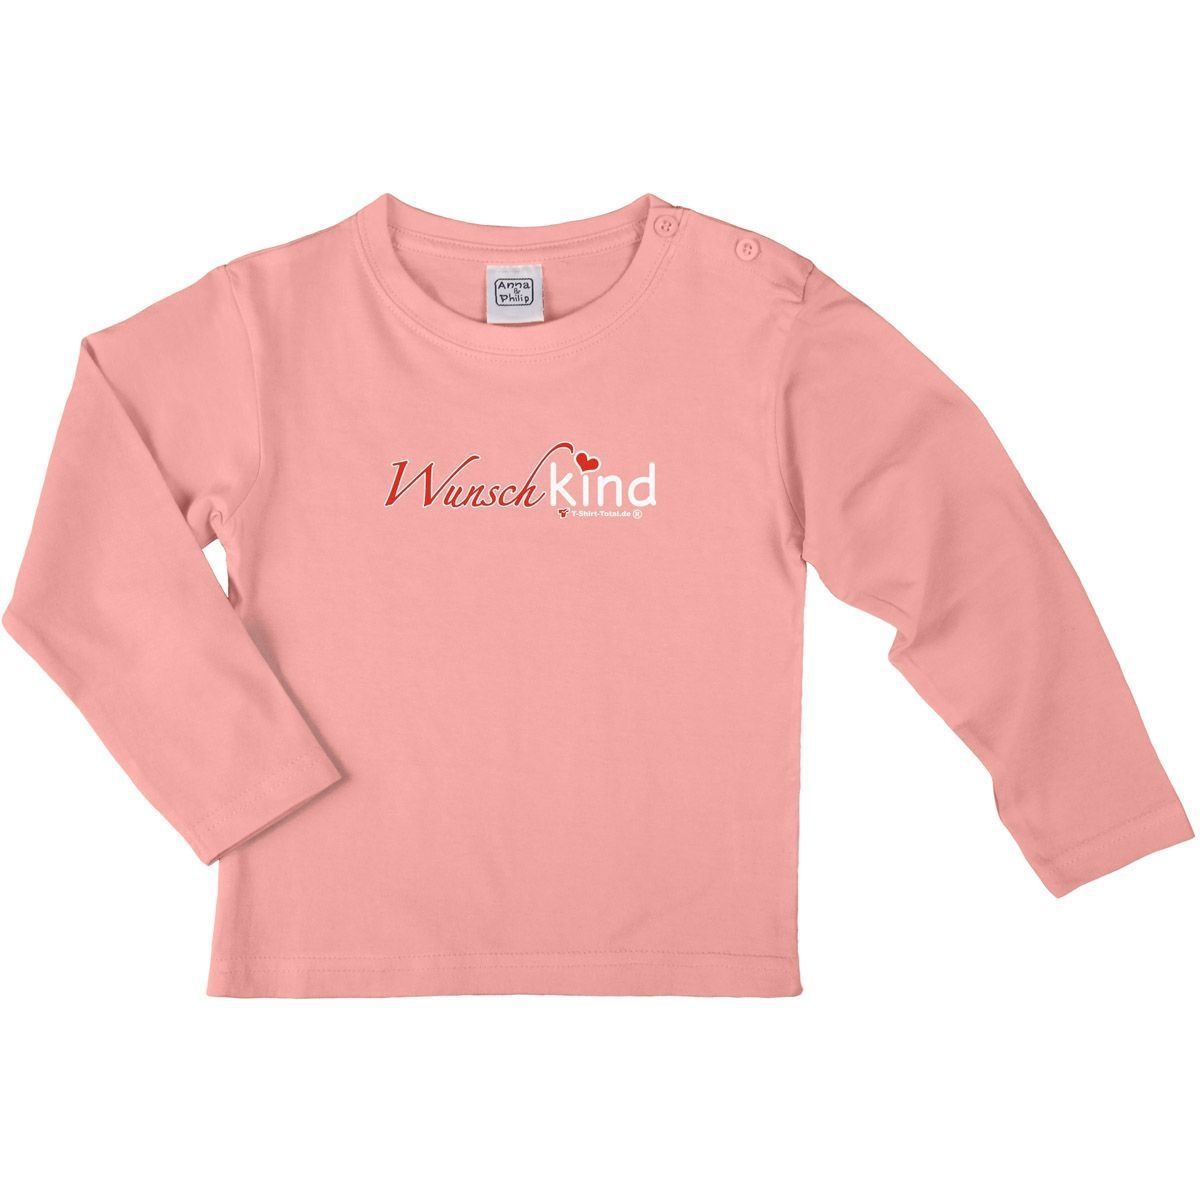 Wunschkind Kinder Langarm Shirt rosa 104